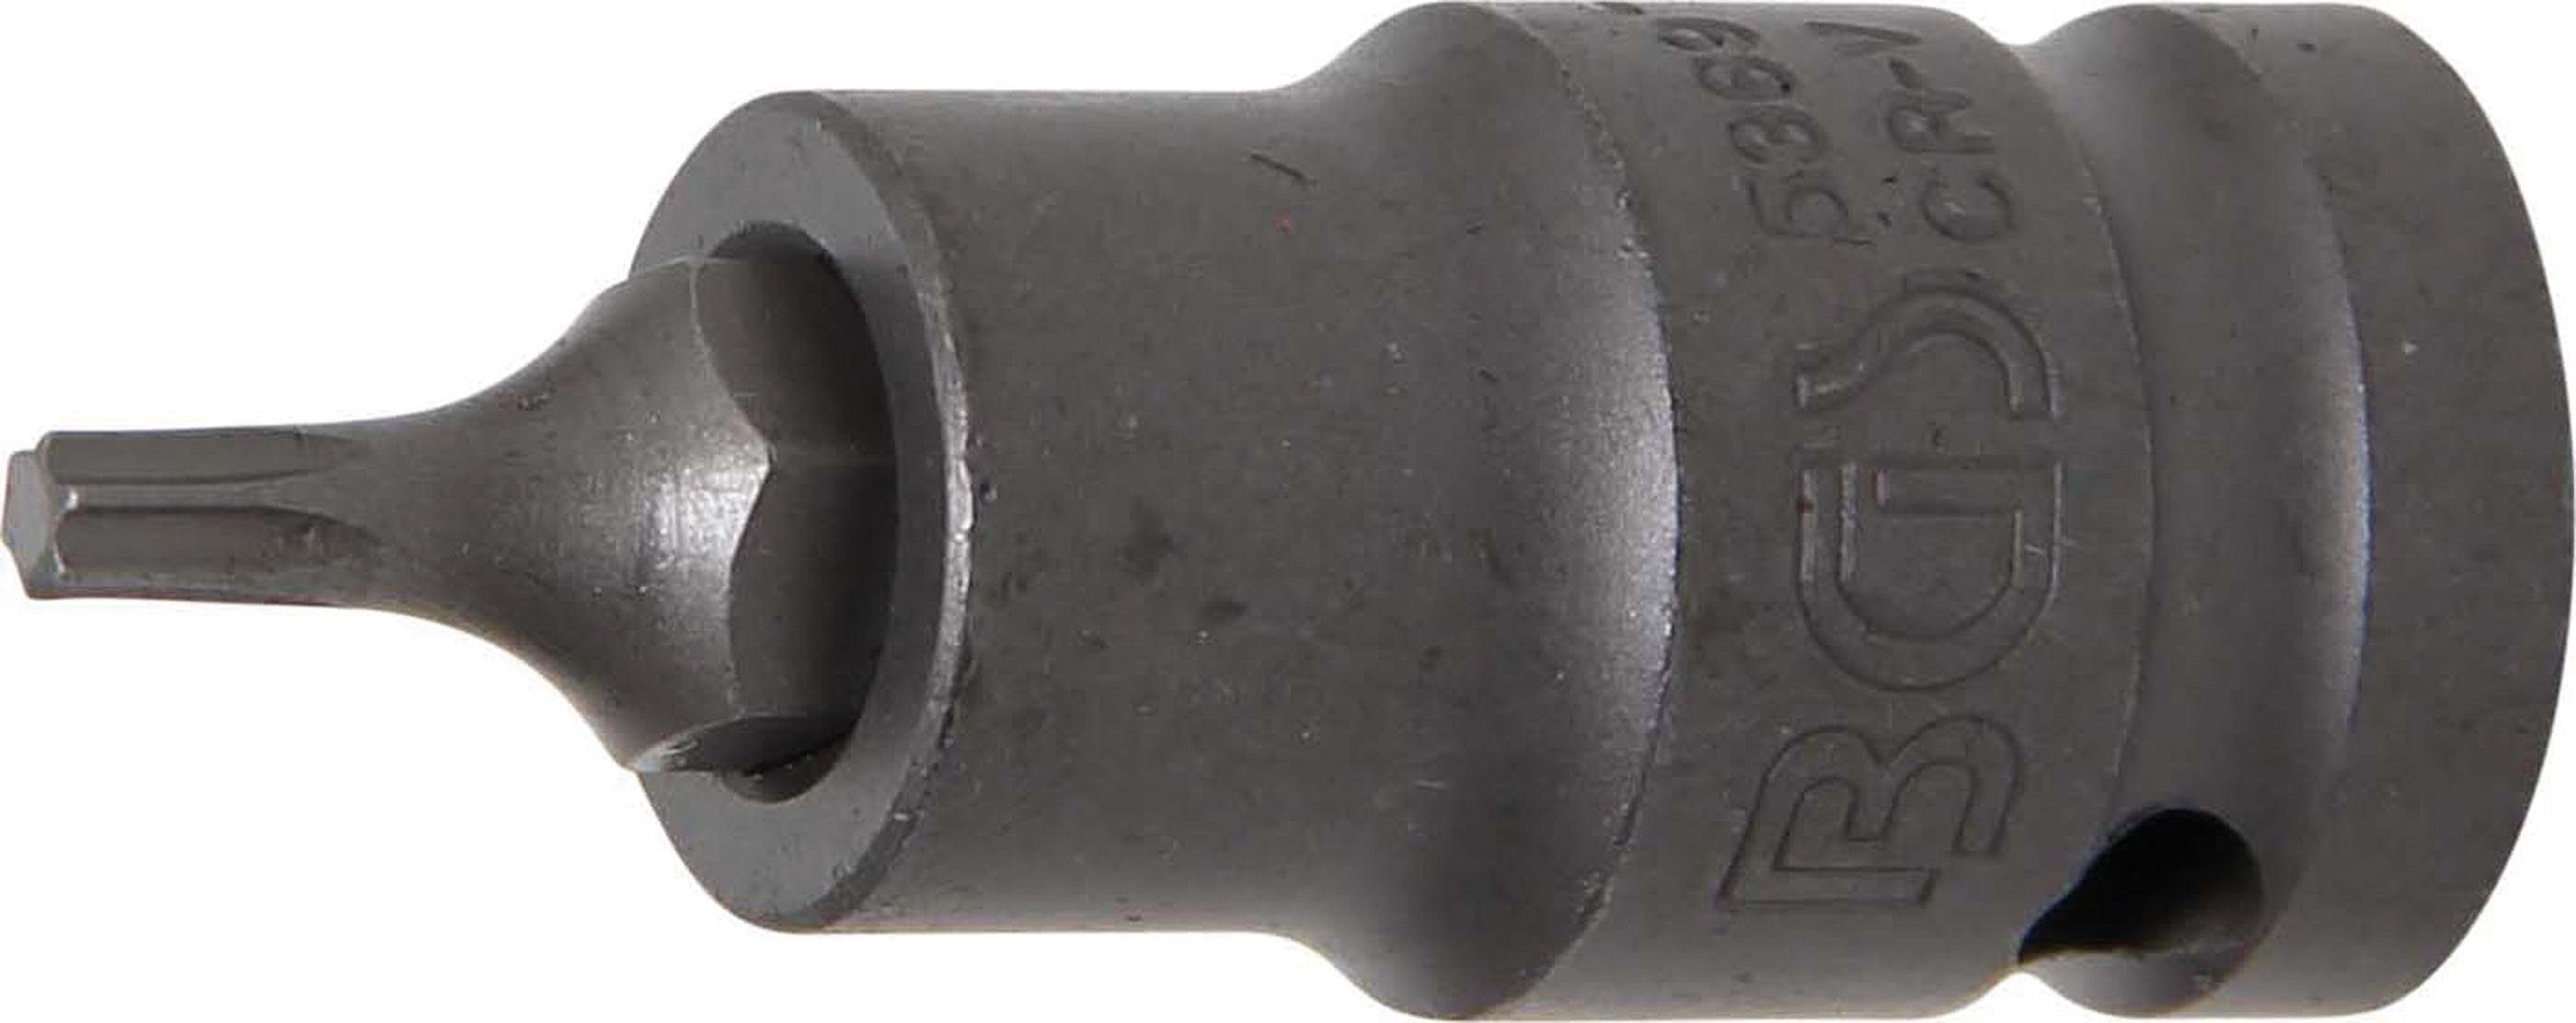 BGS technic Bit-Schraubendreher Kraft-Bit-Einsatz, Antrieb Innenvierkant 12,5 mm (1/2), T-Profil (für Torx) T20